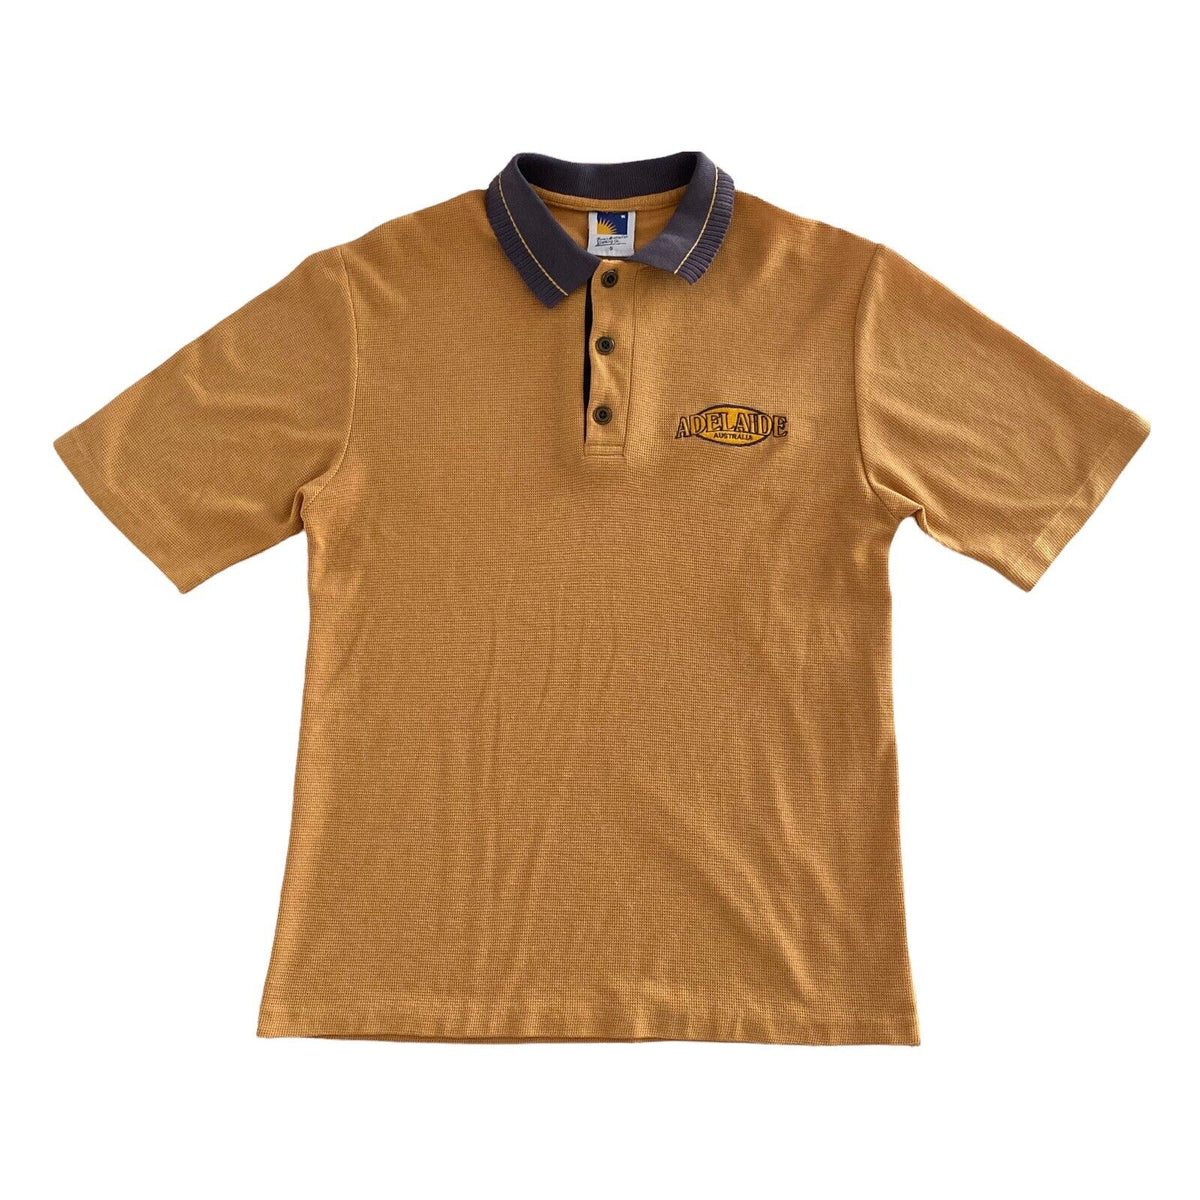 Adelaide Australia Vintage Mens Polo Shirt - Small